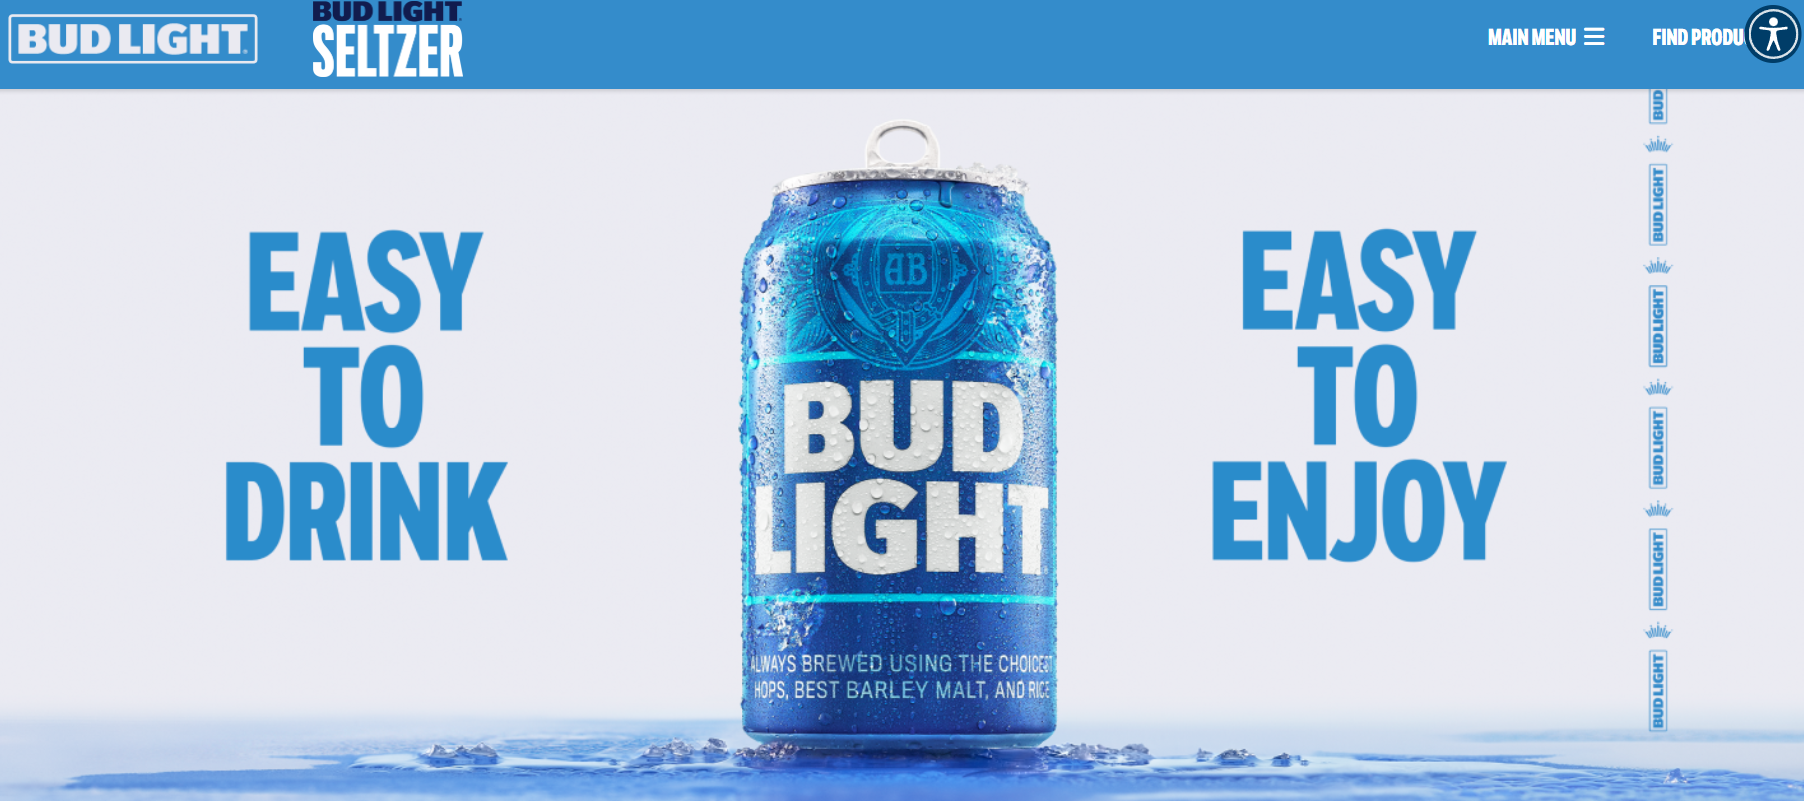 Bud Light July 4th Sales